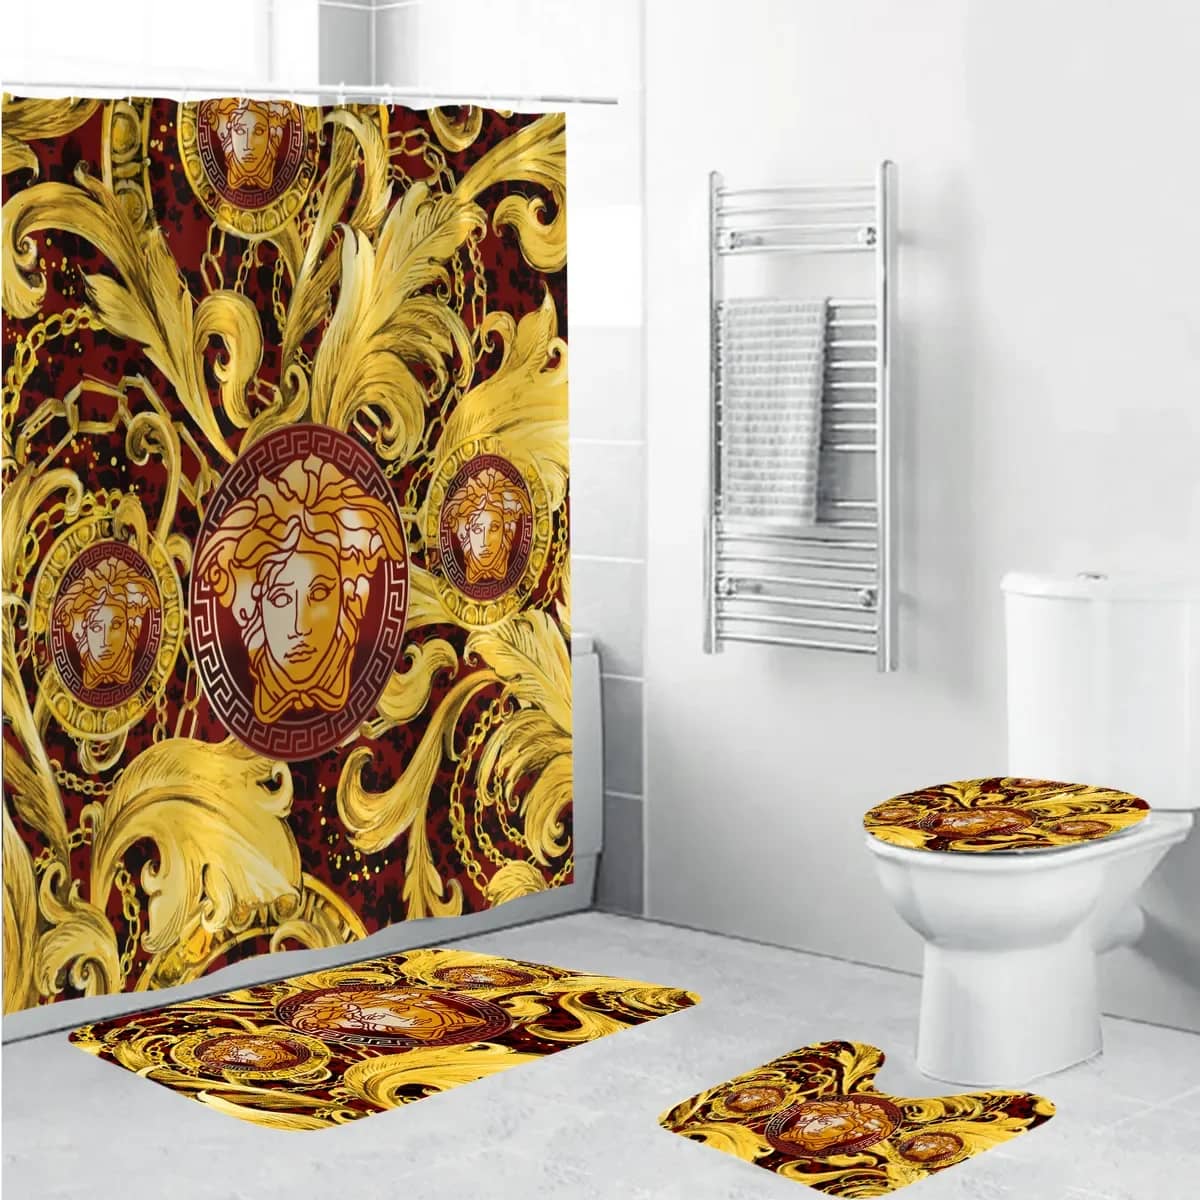 Versace Golden Logo Luxury Brand Premium Bathroom Sets